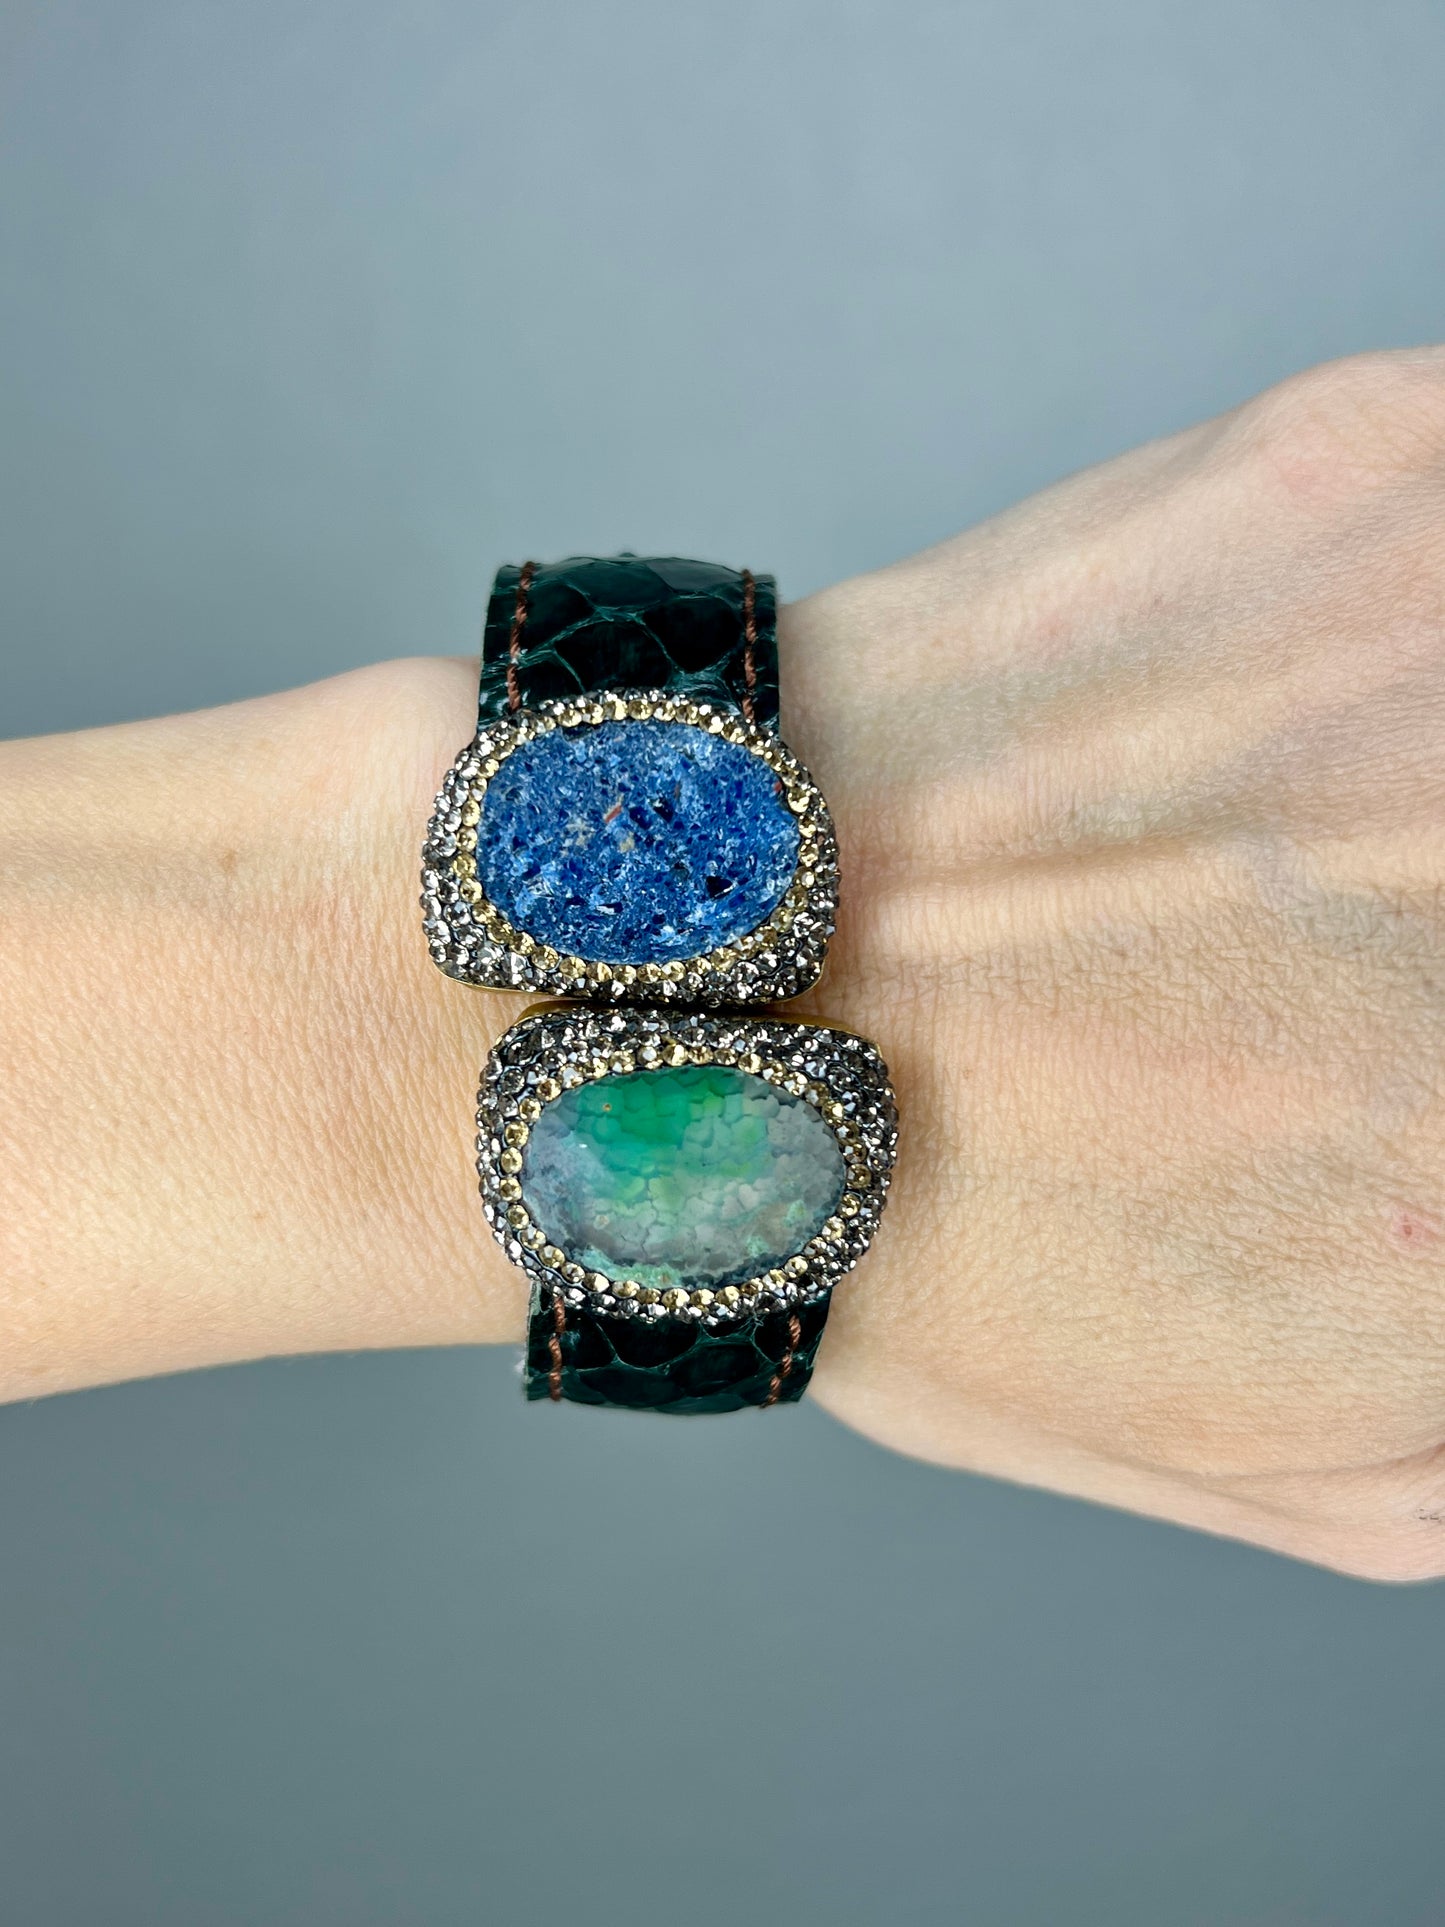 Green & Blue Quartz Gemstone Leather Bracelet